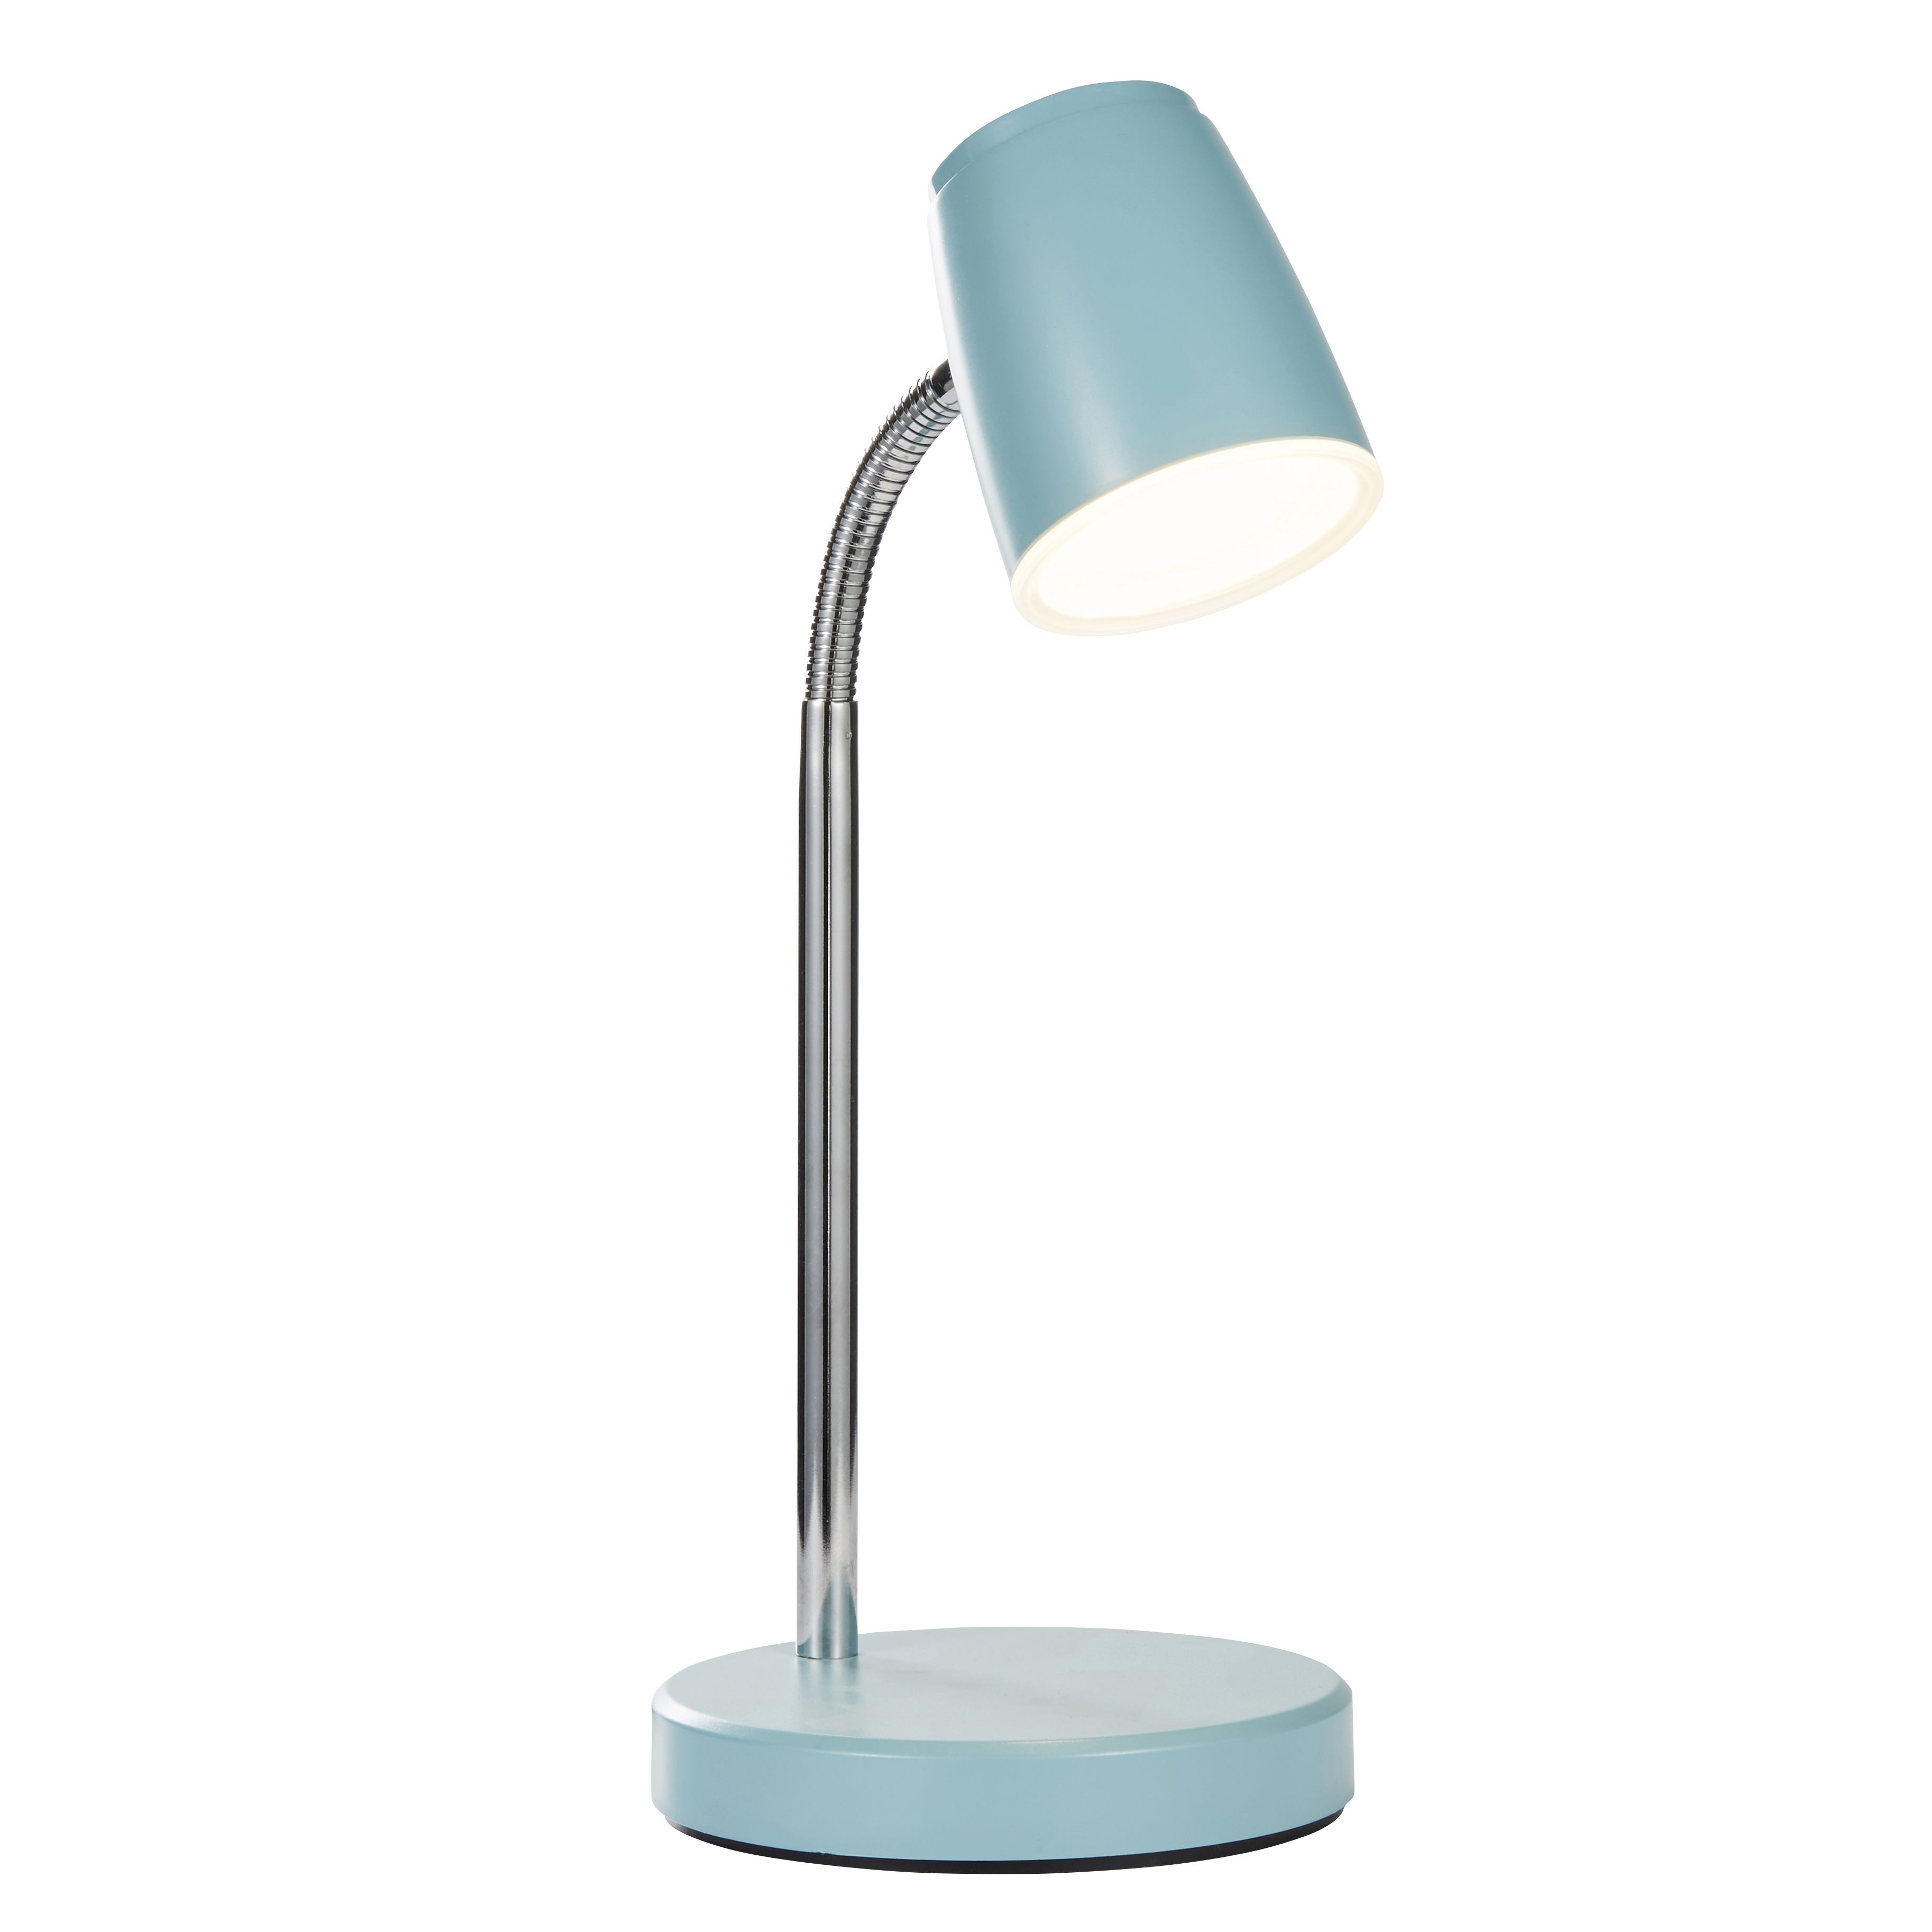 Glow Ayla Blue Table lamp